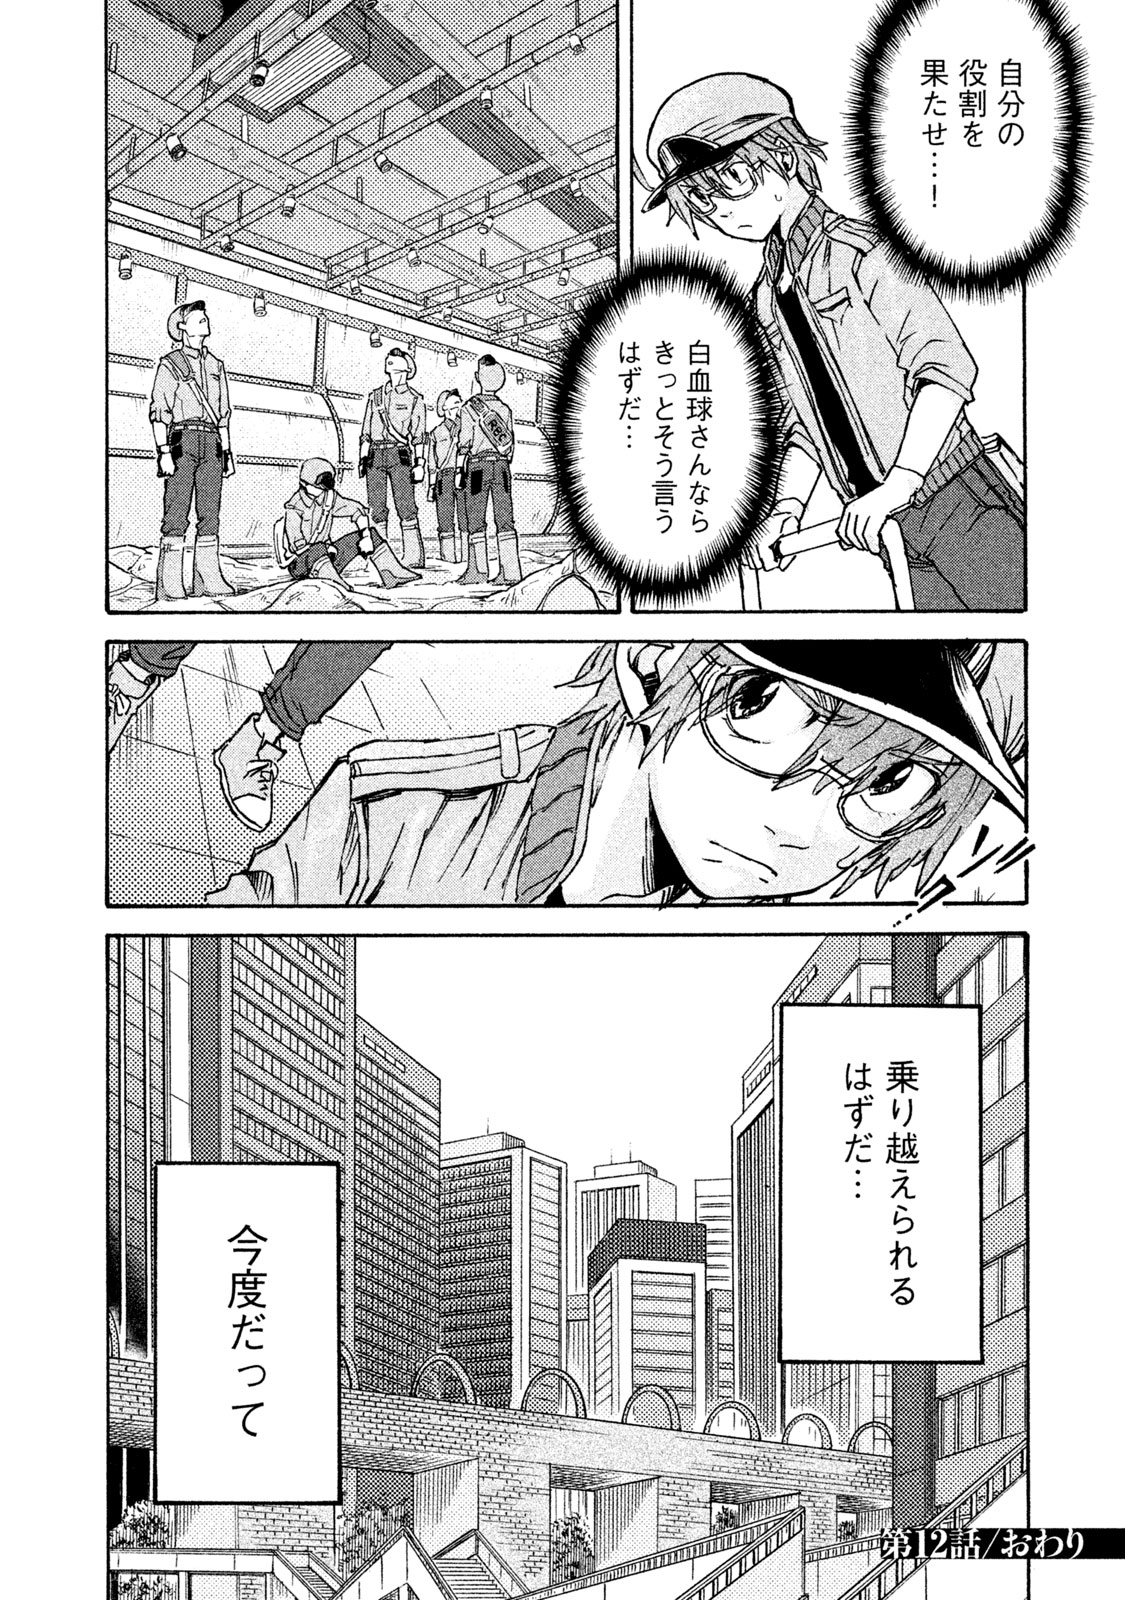 Hataraku Saibou BLACK - Chapter 12 - Page 22